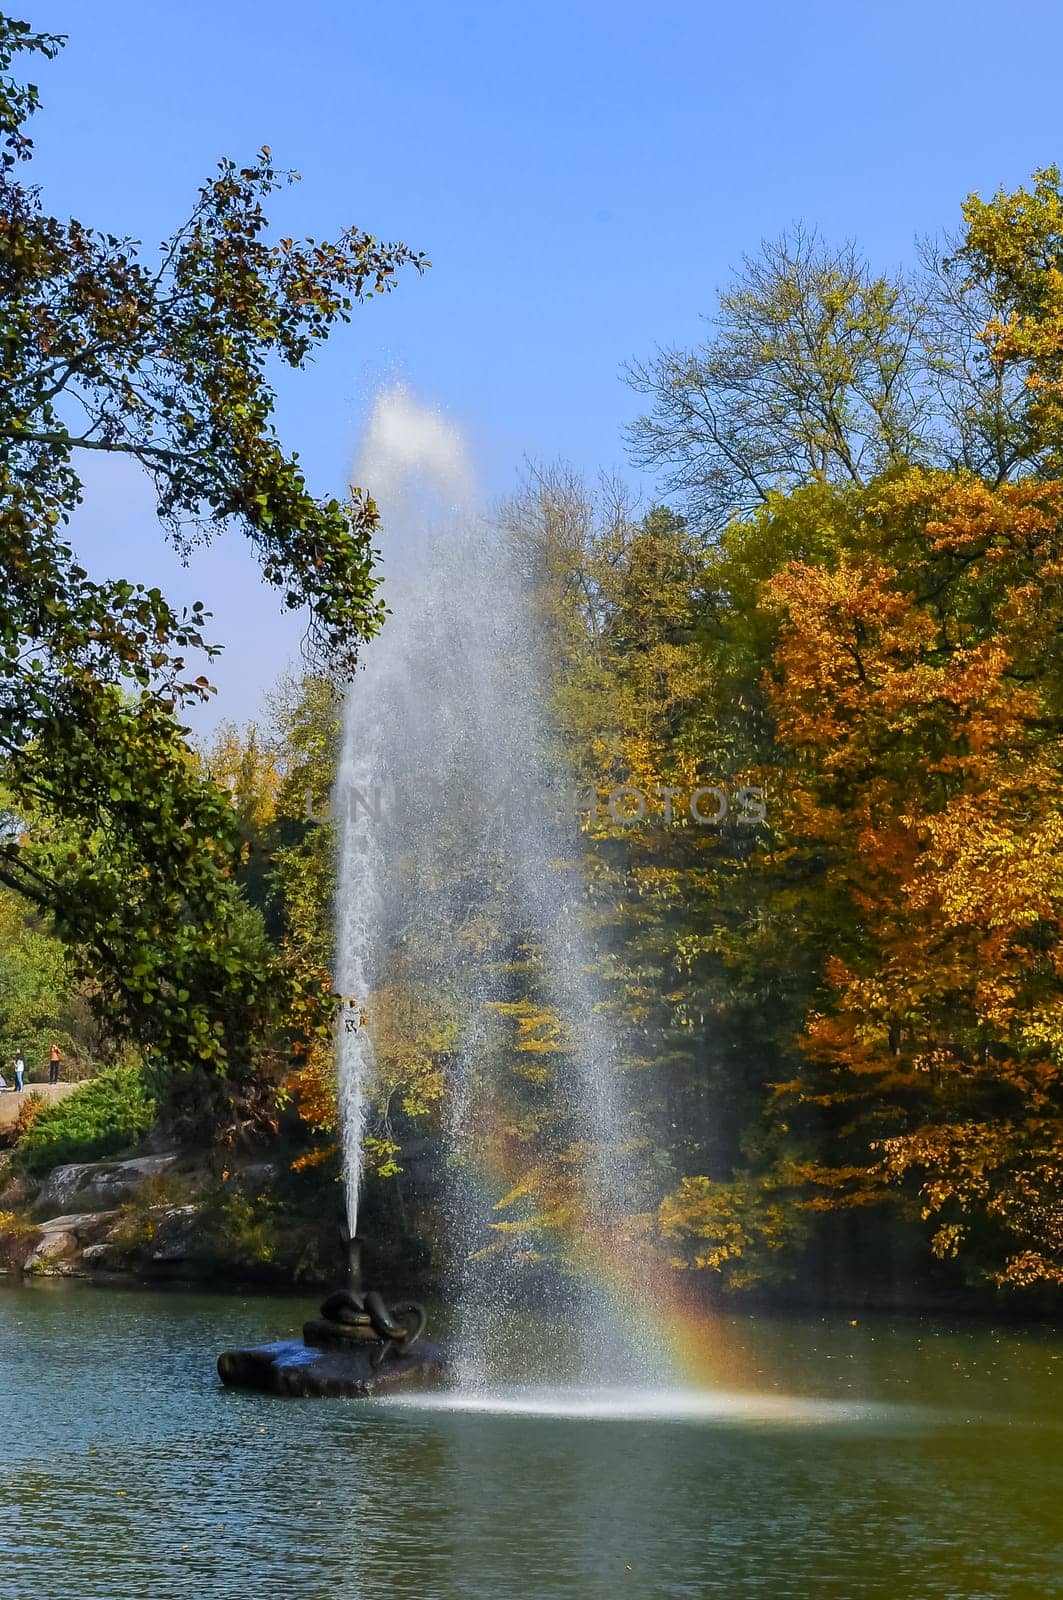 UMAN, UKRAINE - OCTOBER 21, 2012: Large fountain "Snake" in the arboretum Sofiyivka park, Uman by Hydrobiolog